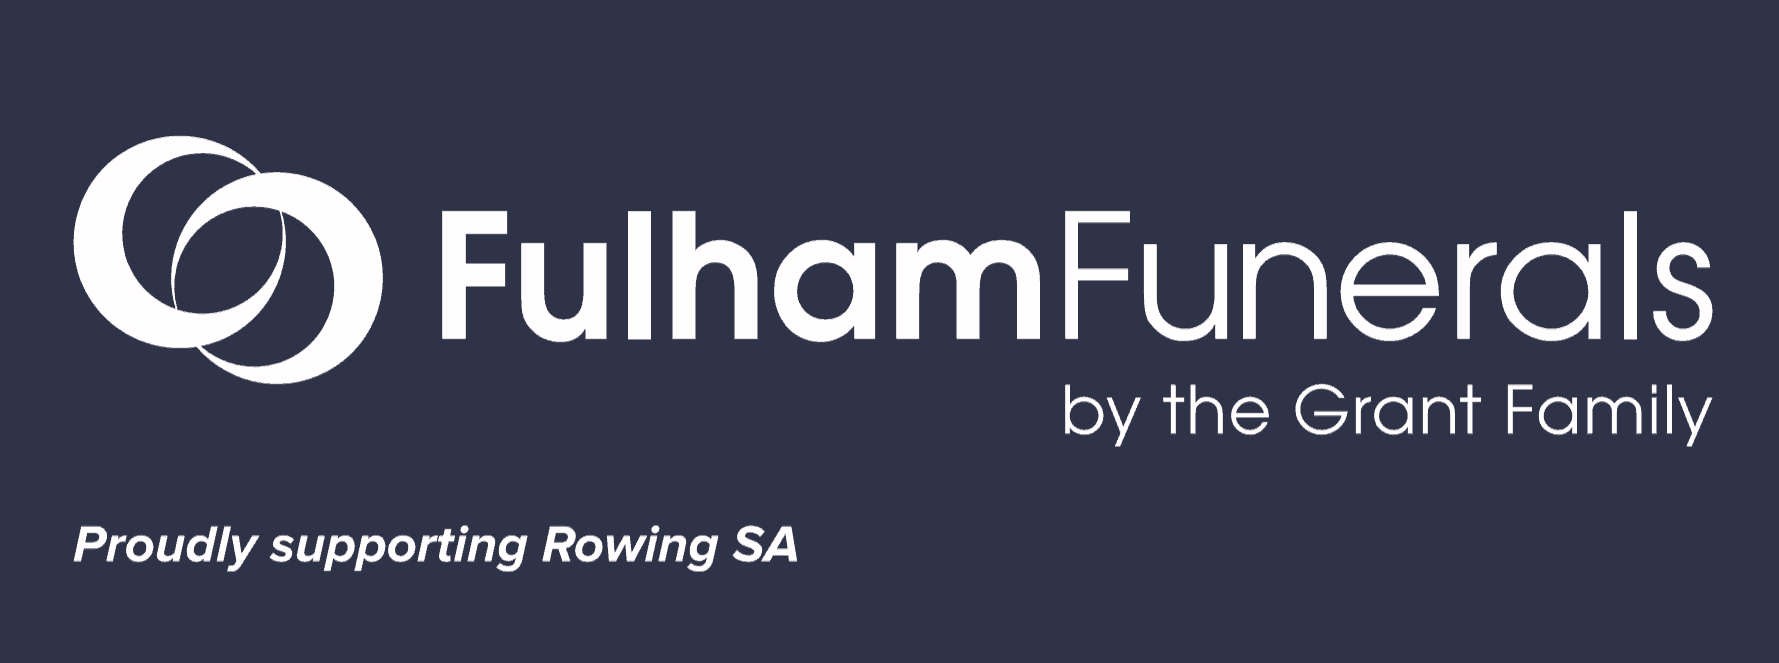 Fulham Funerals Logo - Rowing SA Key Corporate Partner